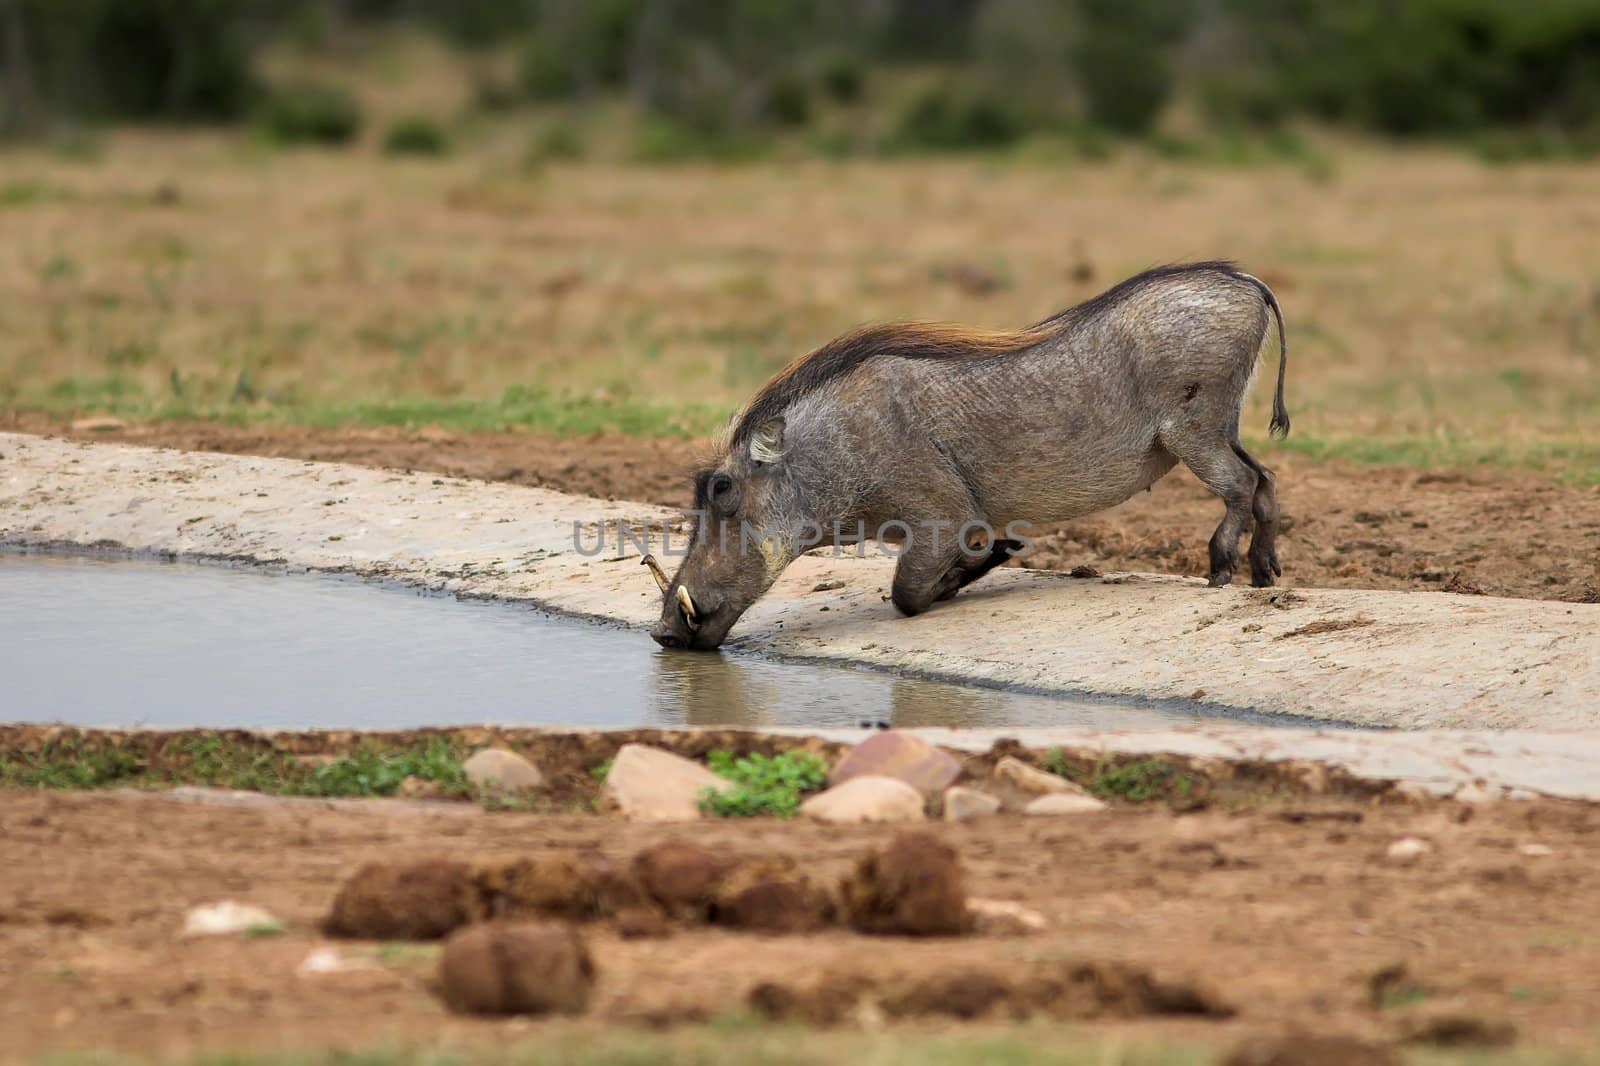 Thirsty Warthog by nightowlza